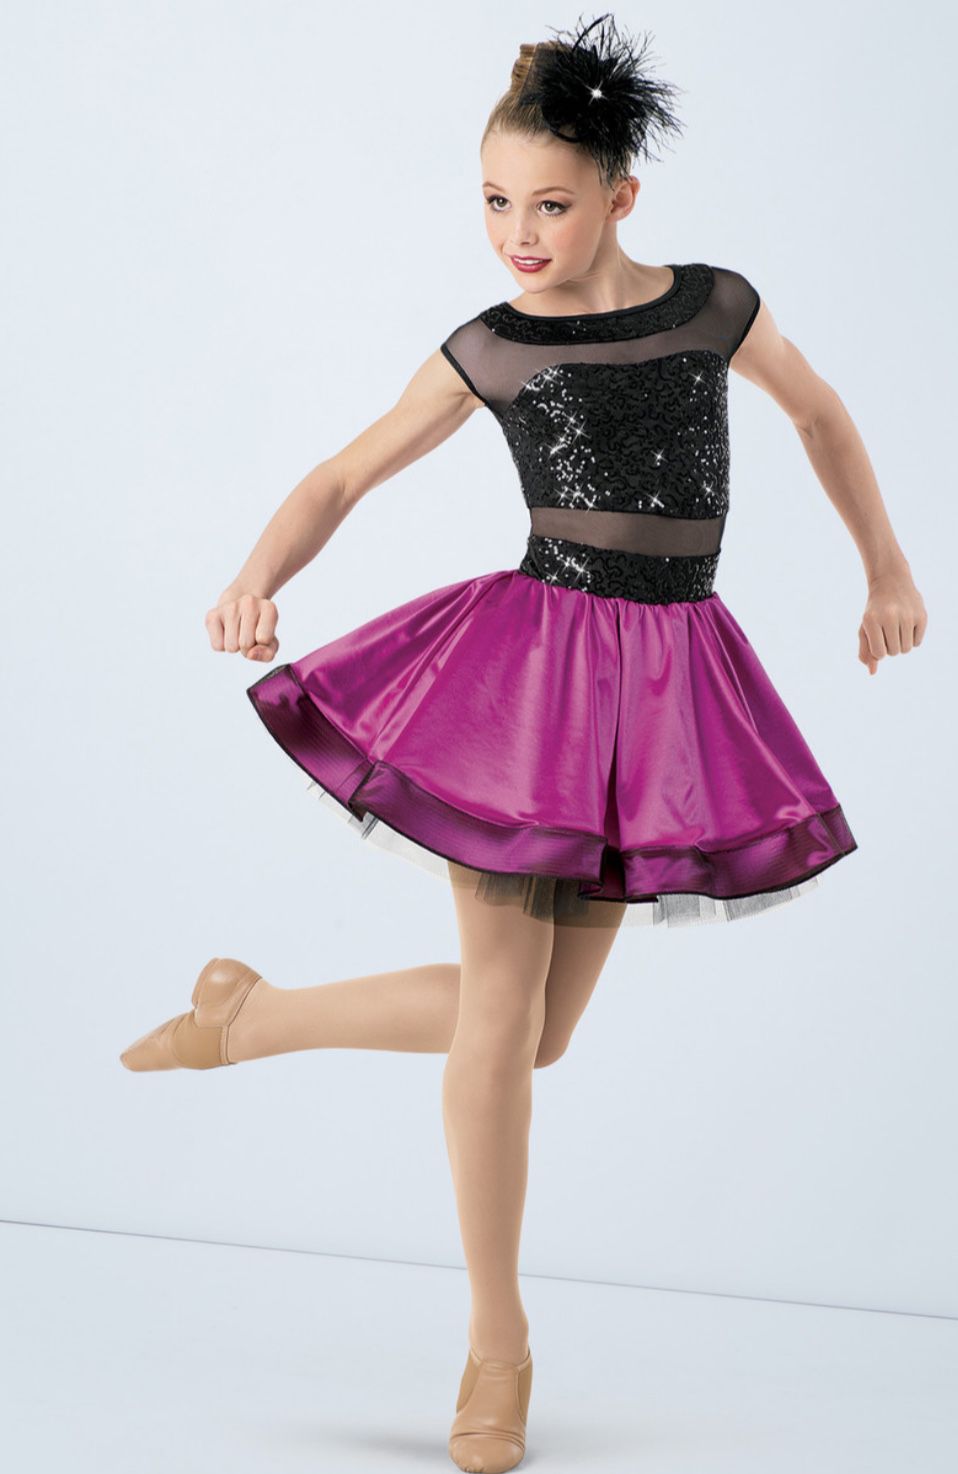 *REDUCED PRICE*Weissman Dance costume hot pink tutu ballet jazz dress leotard ANNA SUN 10138 L